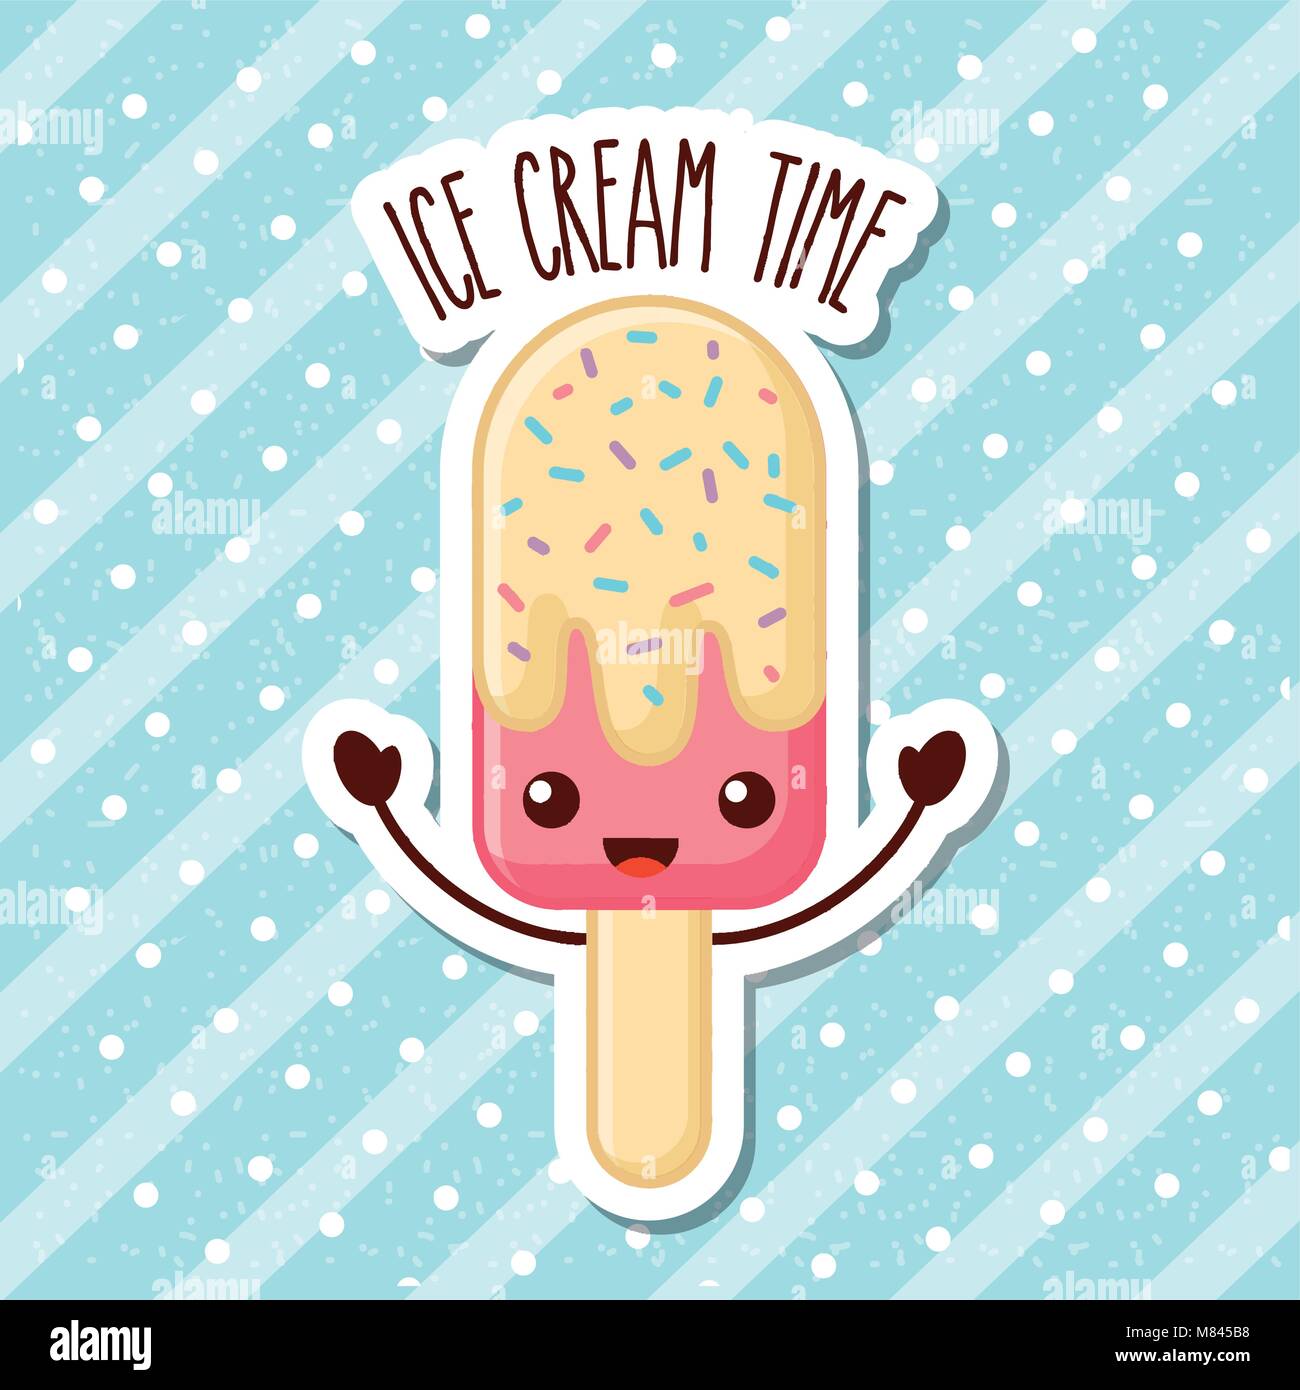 Ice Cream Time Cartoon Kawaii Vector Illustration Stock